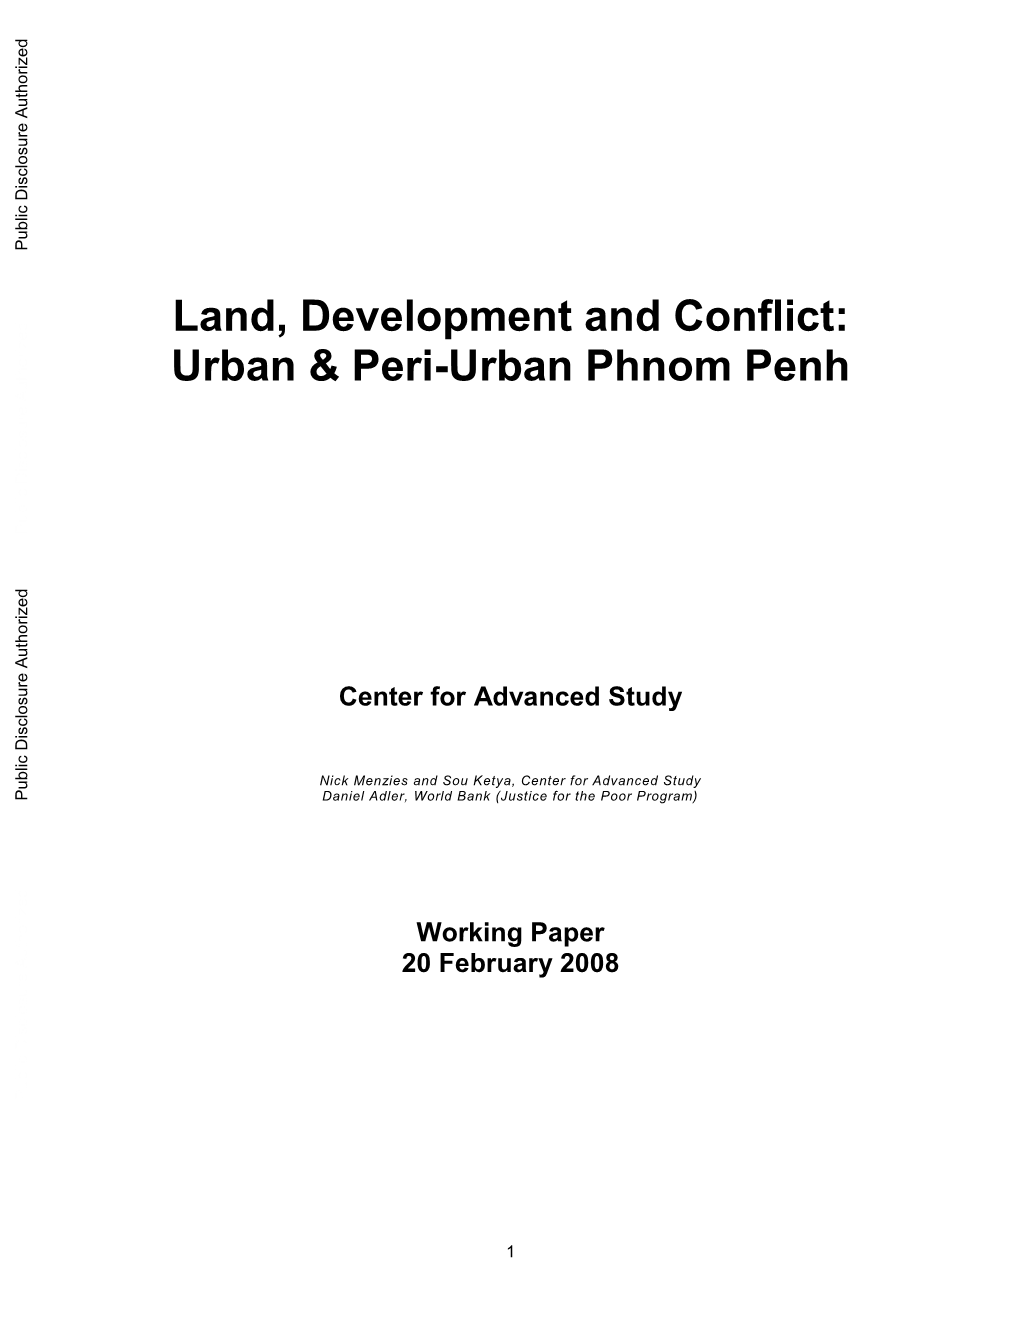 Land, Development and Conflict: Urban & Peri-Urban Phnom Penh